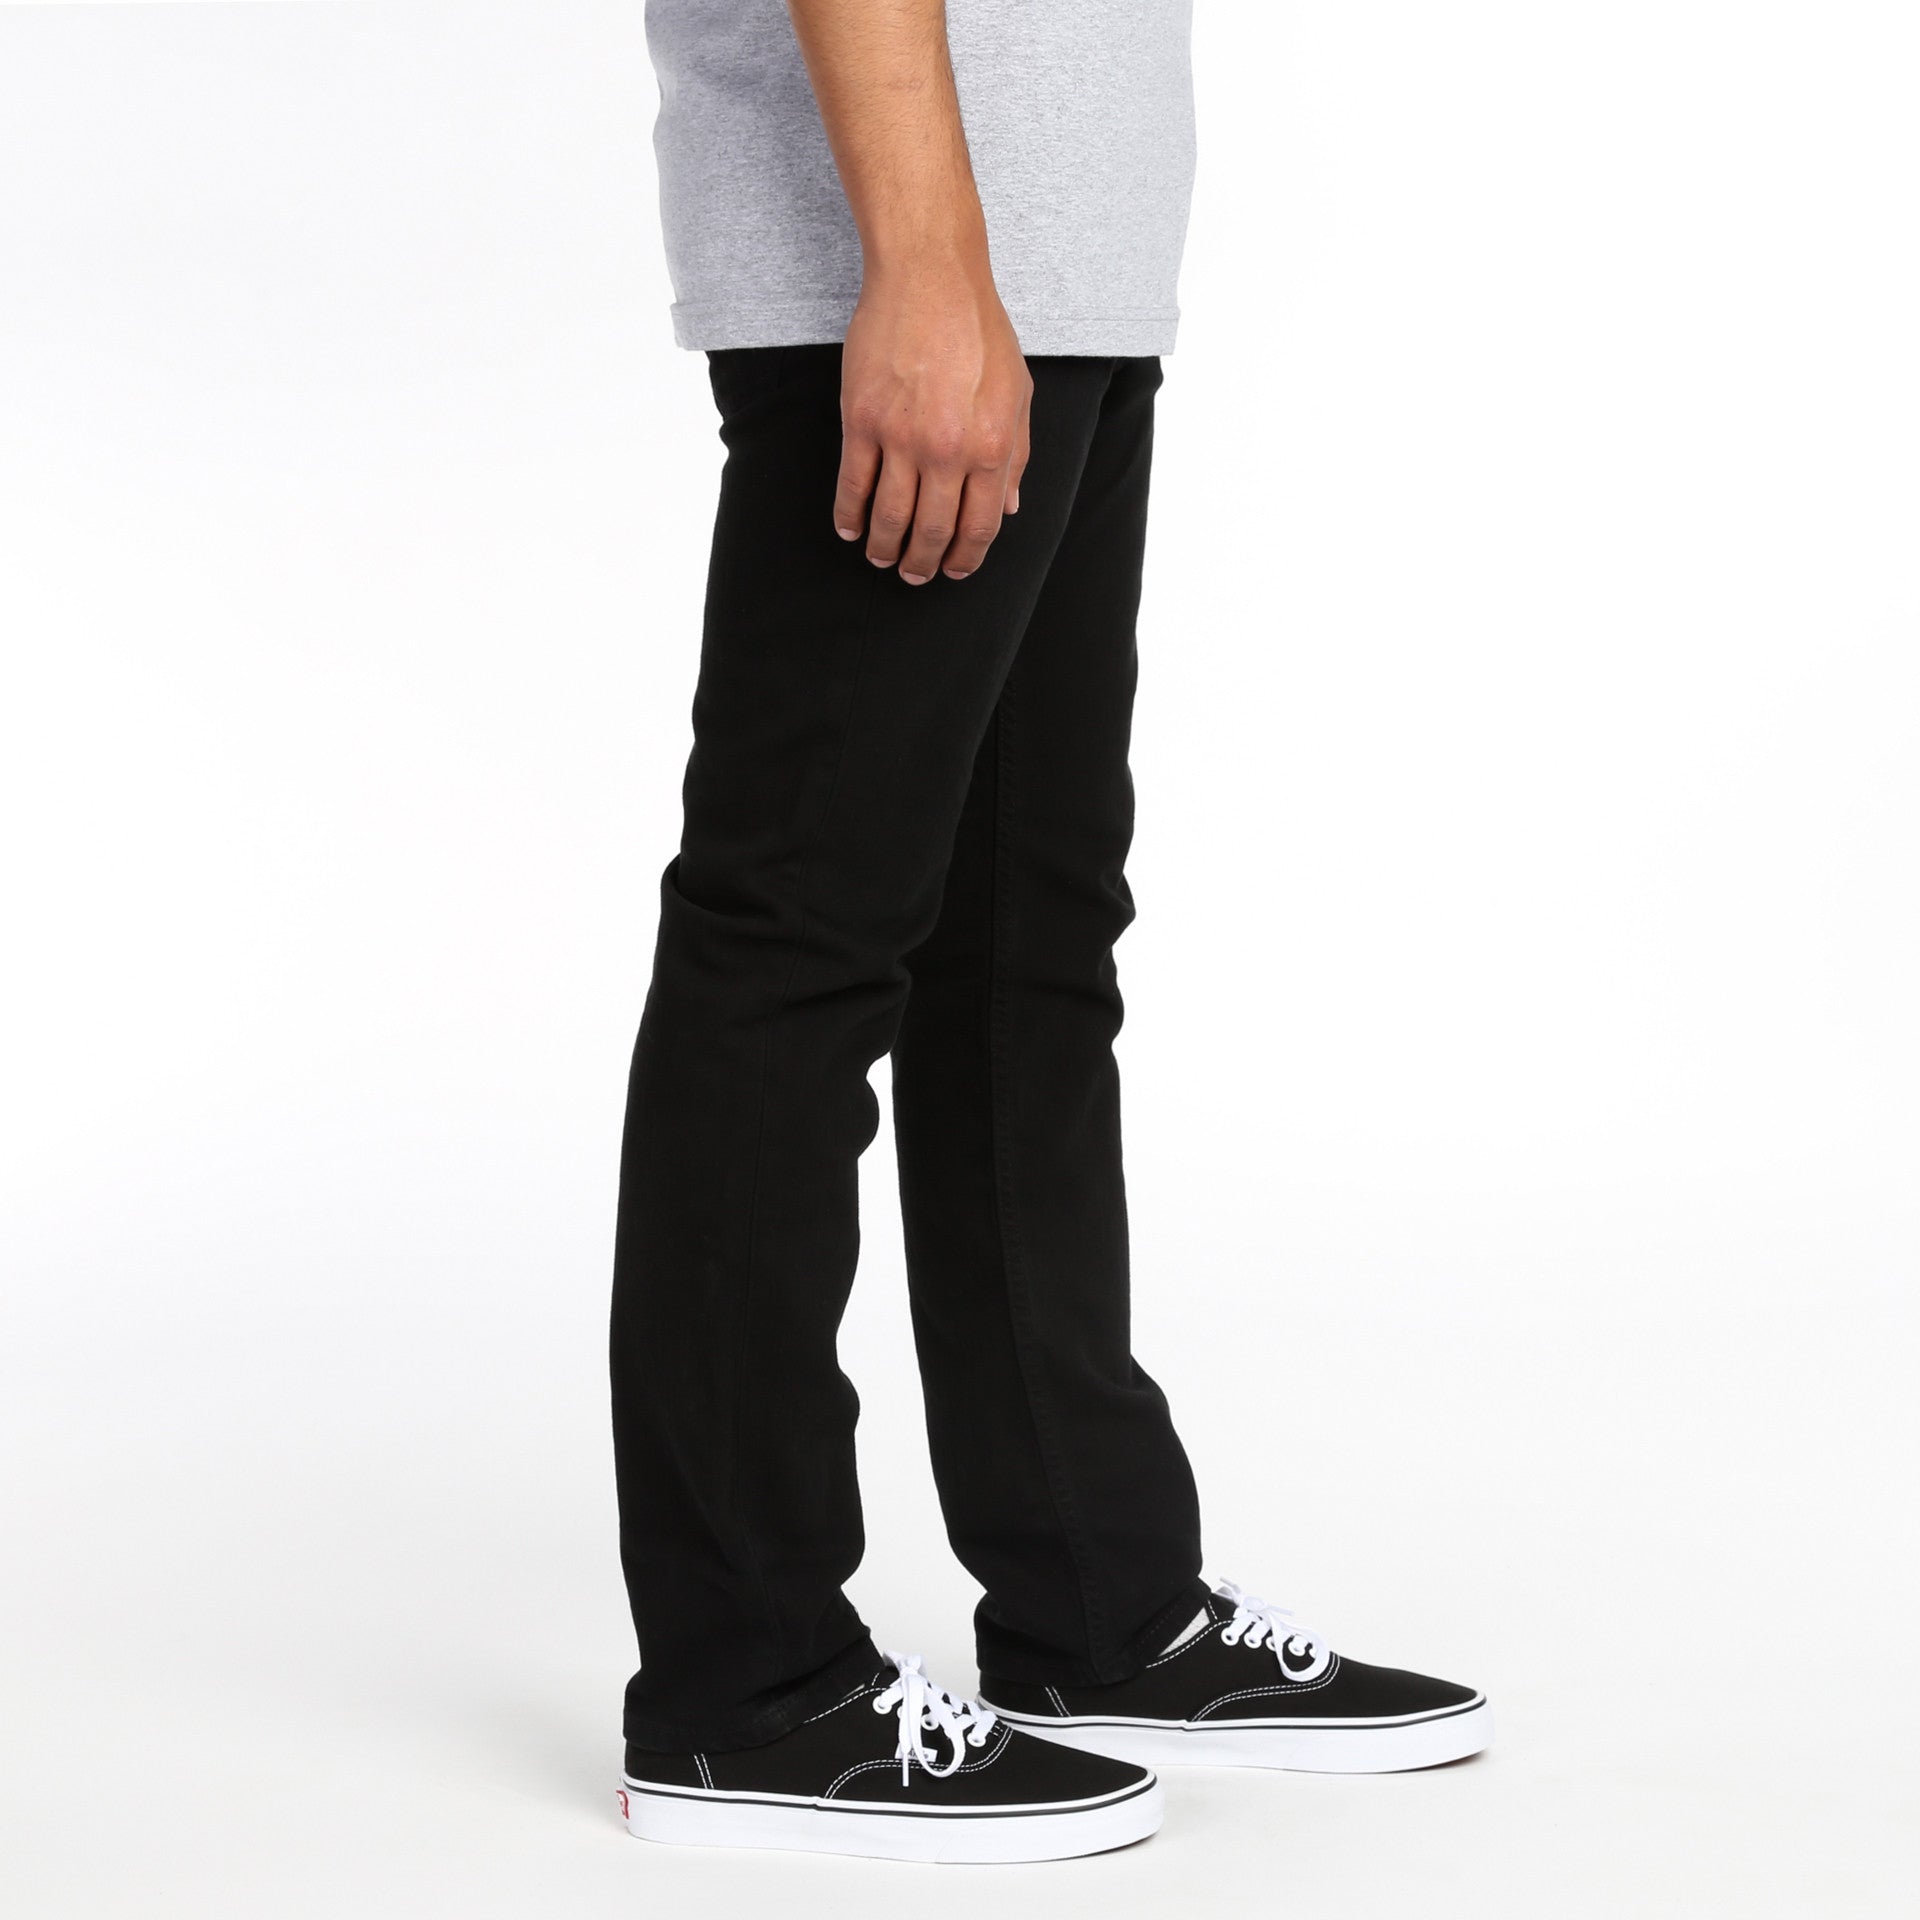 levi's jeans 511 slim fit black stretch